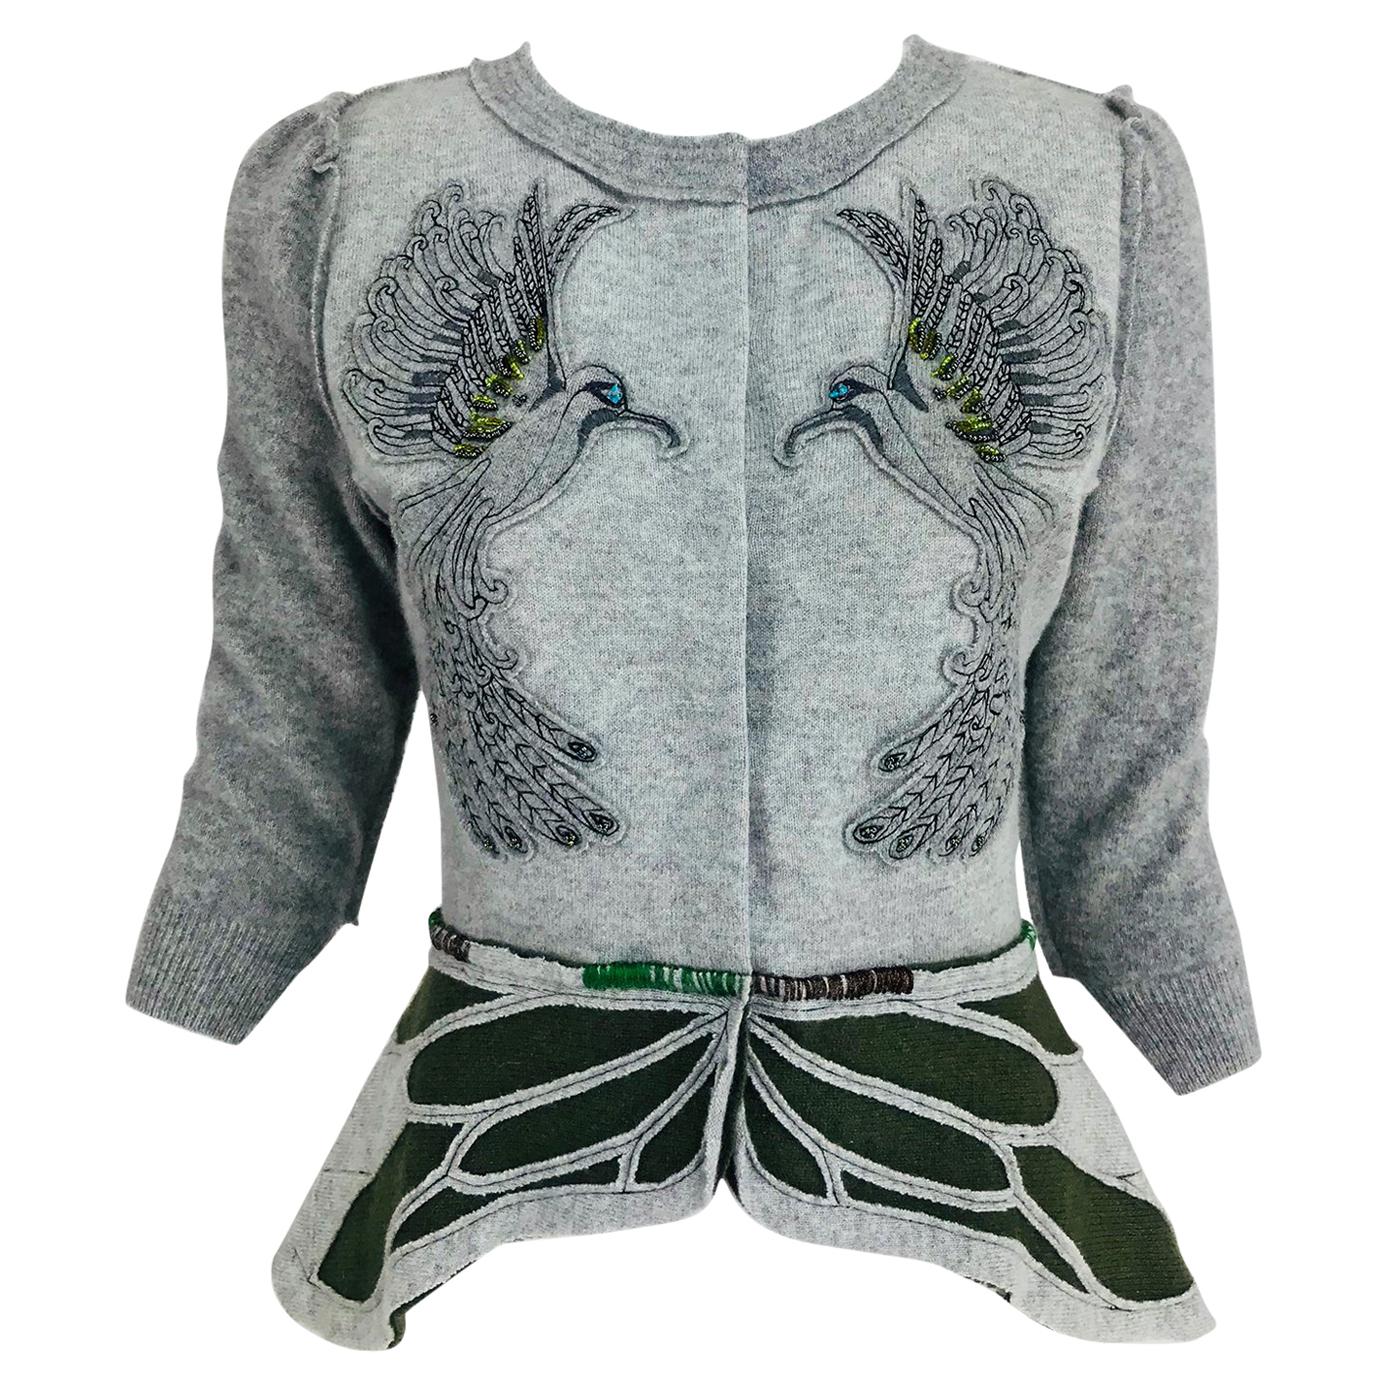 Koi Suwannagate cashmere bird applique sweater